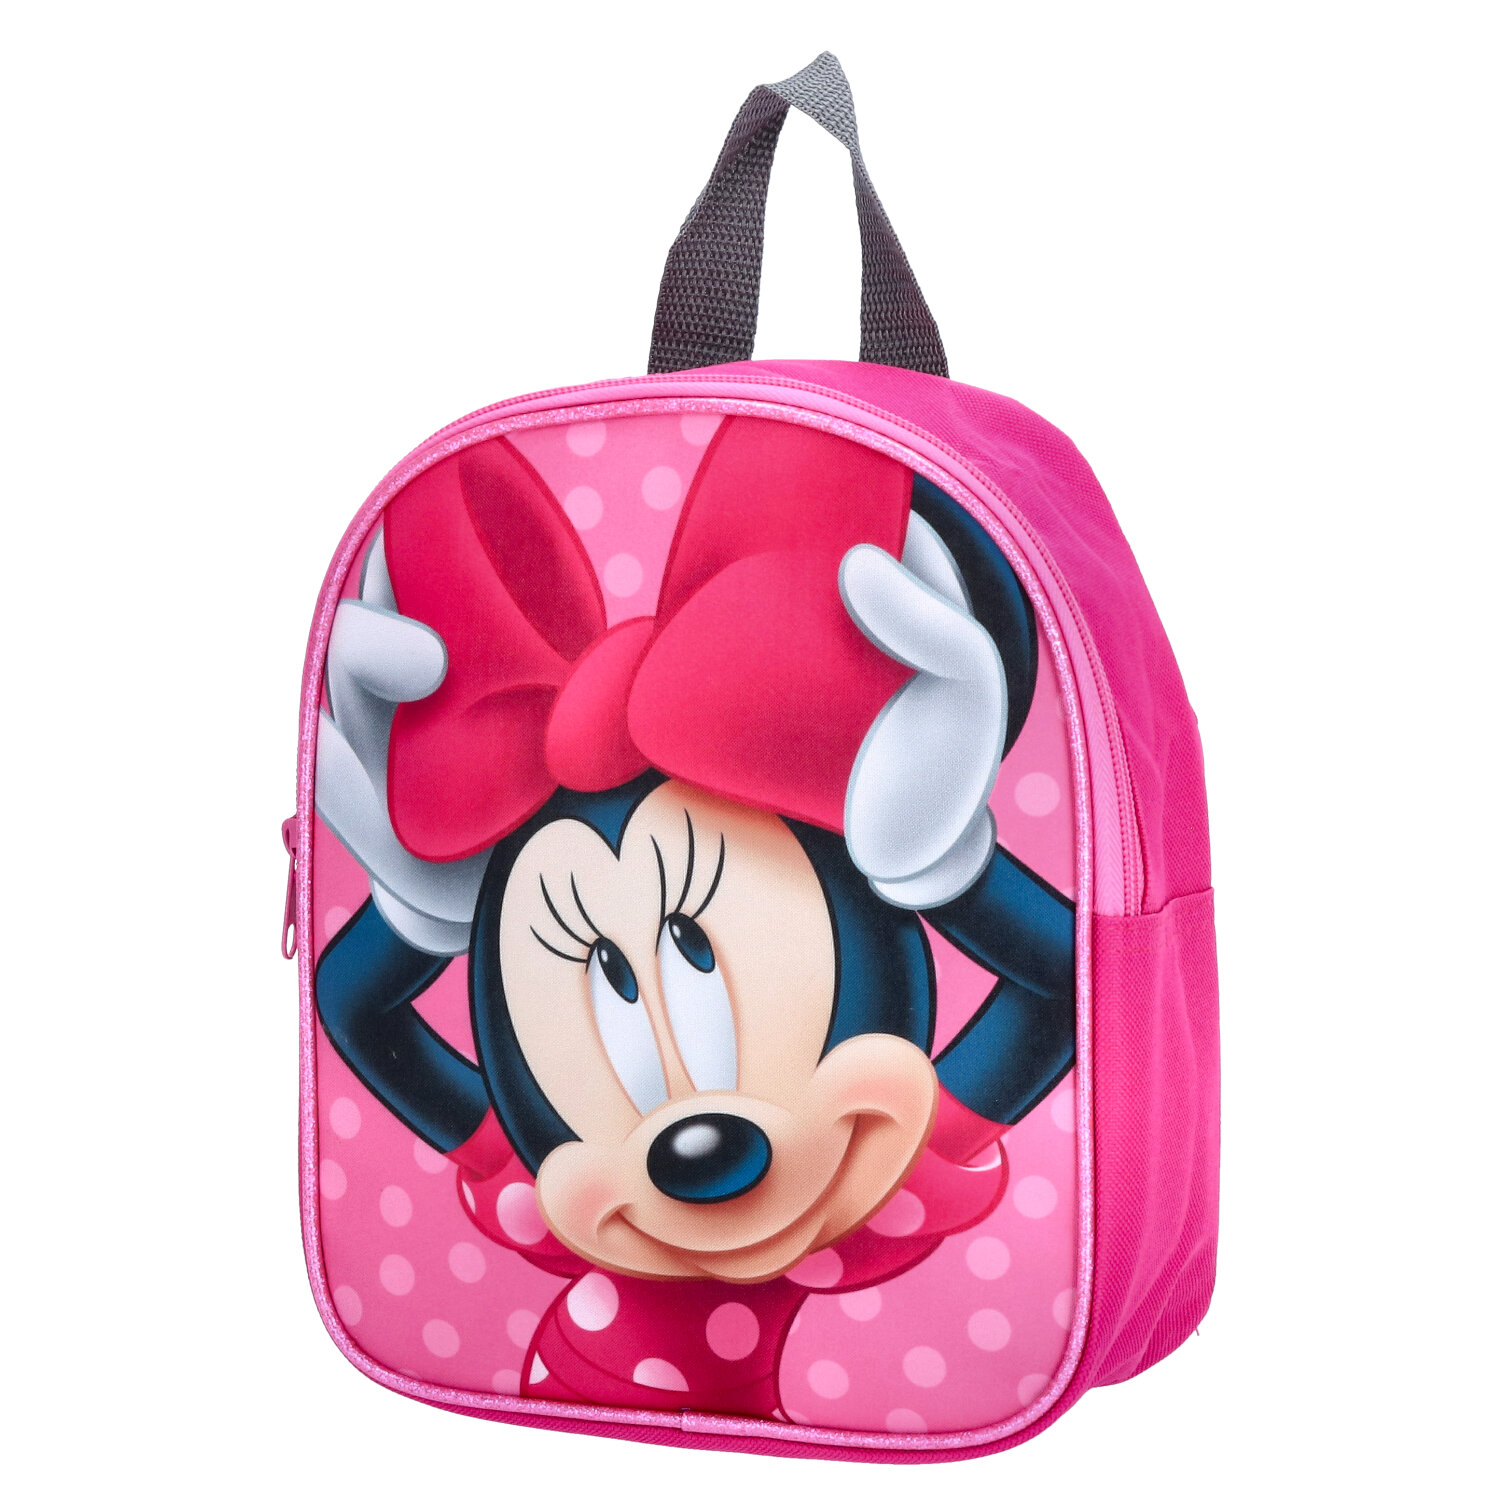 Jacob Mini Rucksack Minnie Mouse Disney pink